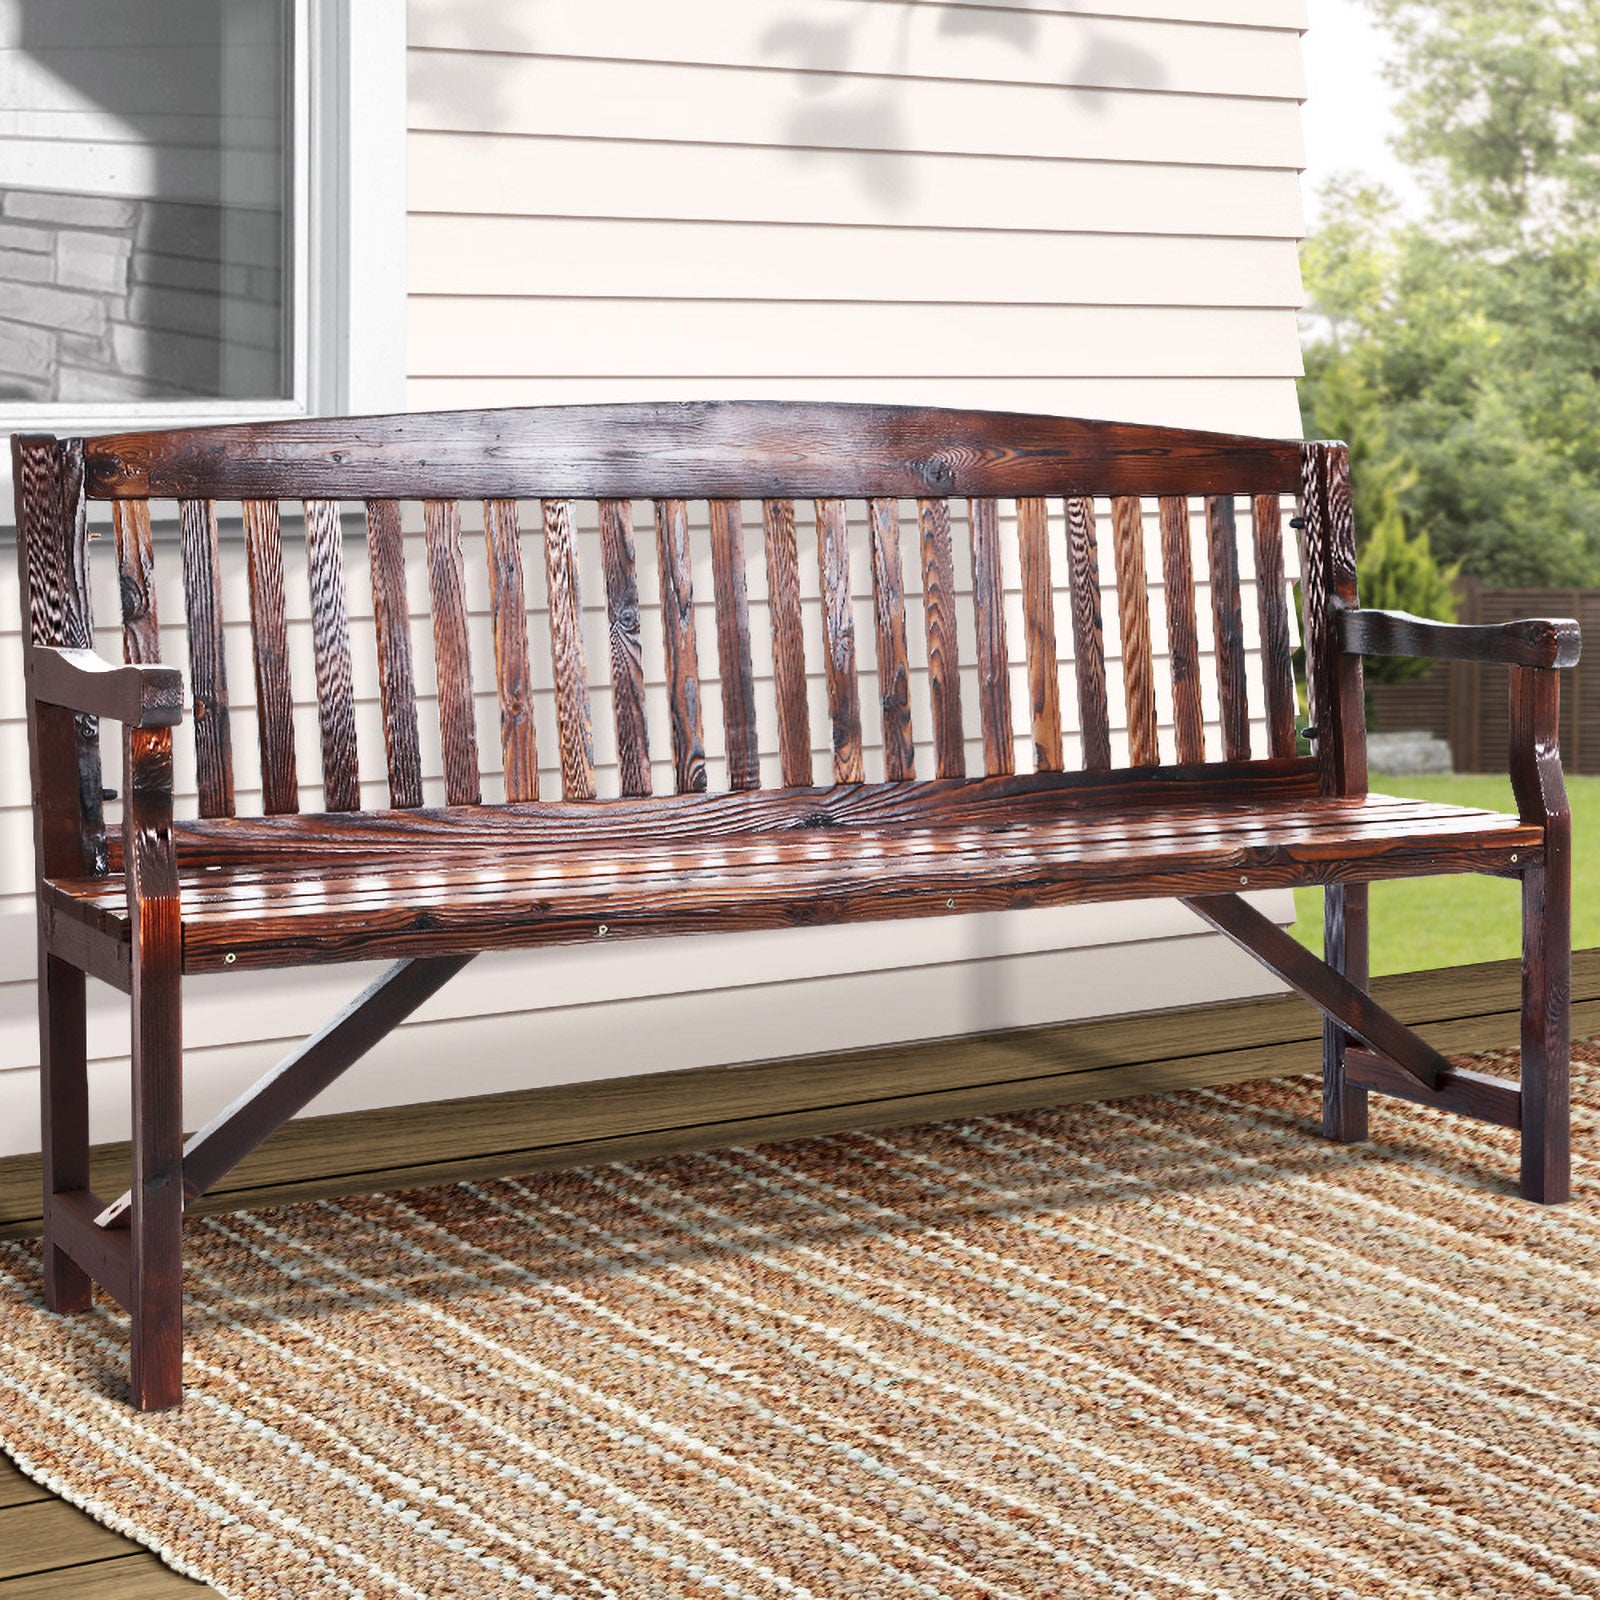 Wooden Garden Bench Chair Natural Outdoor Furniture Décor Patio Deck 3 Seater - Pmboutdoor